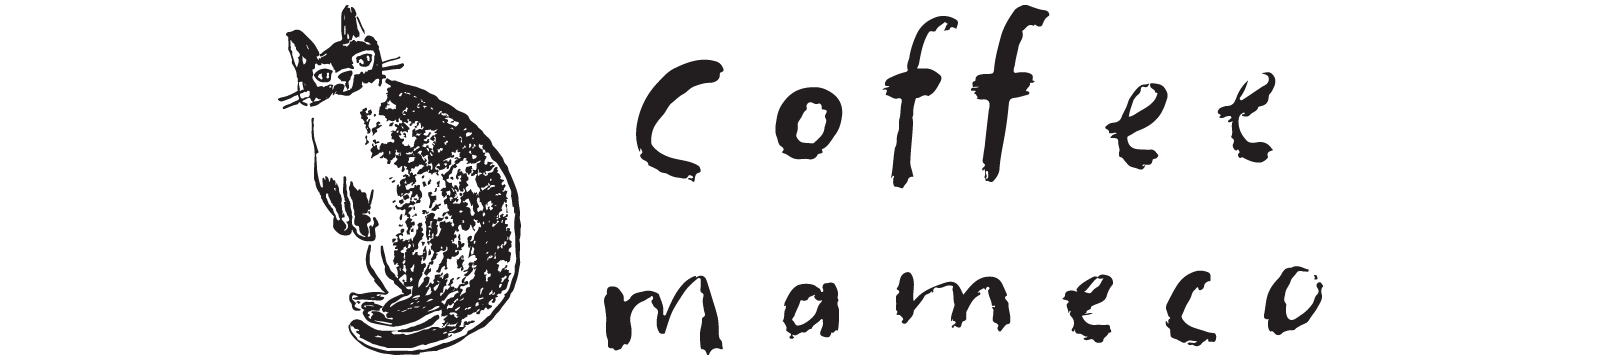 coffee mameco